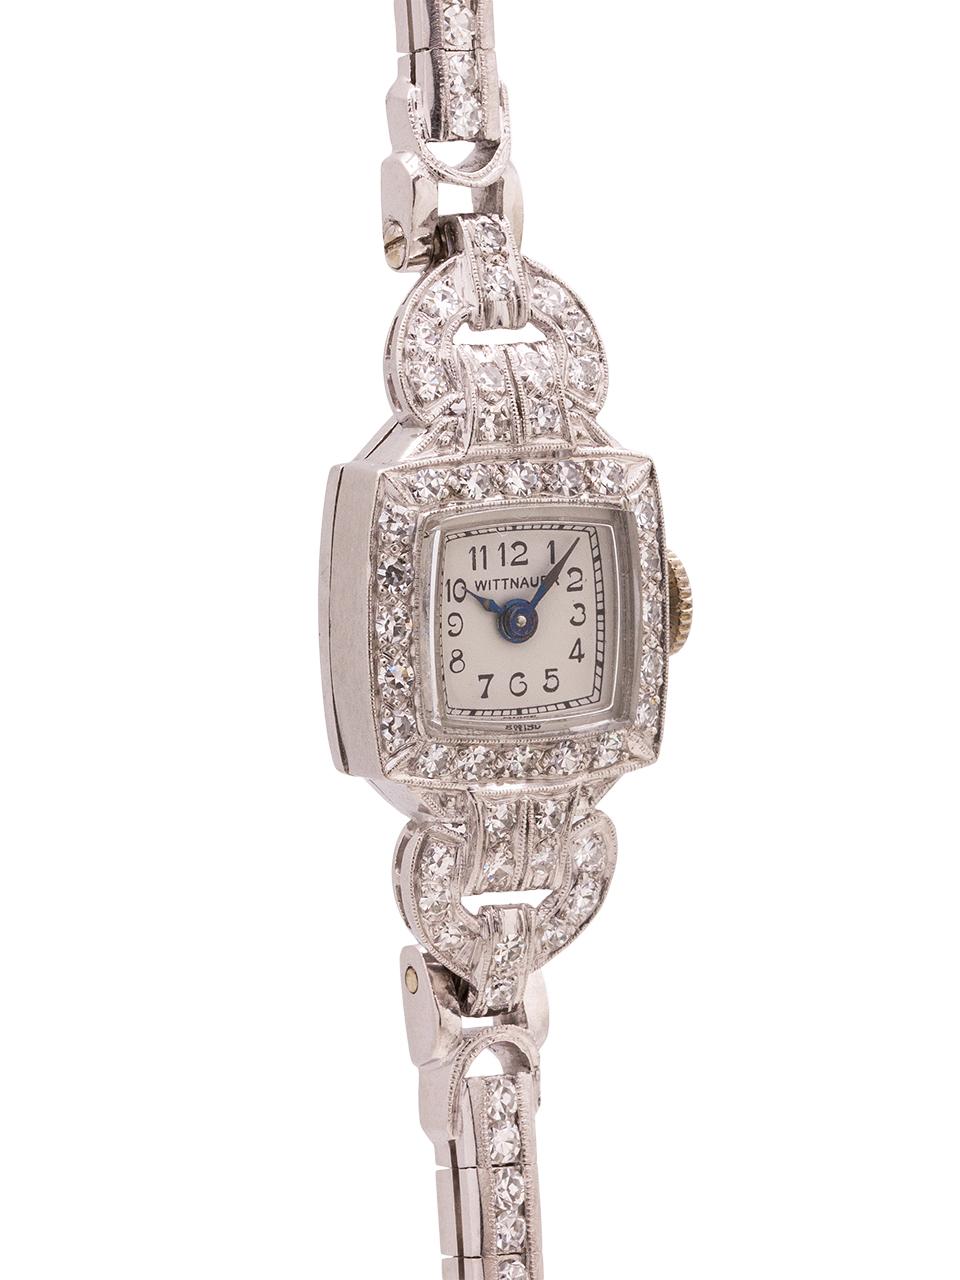 Round Cut Lady Wittnauer Platinum and Diamond Watch, circa 1940s